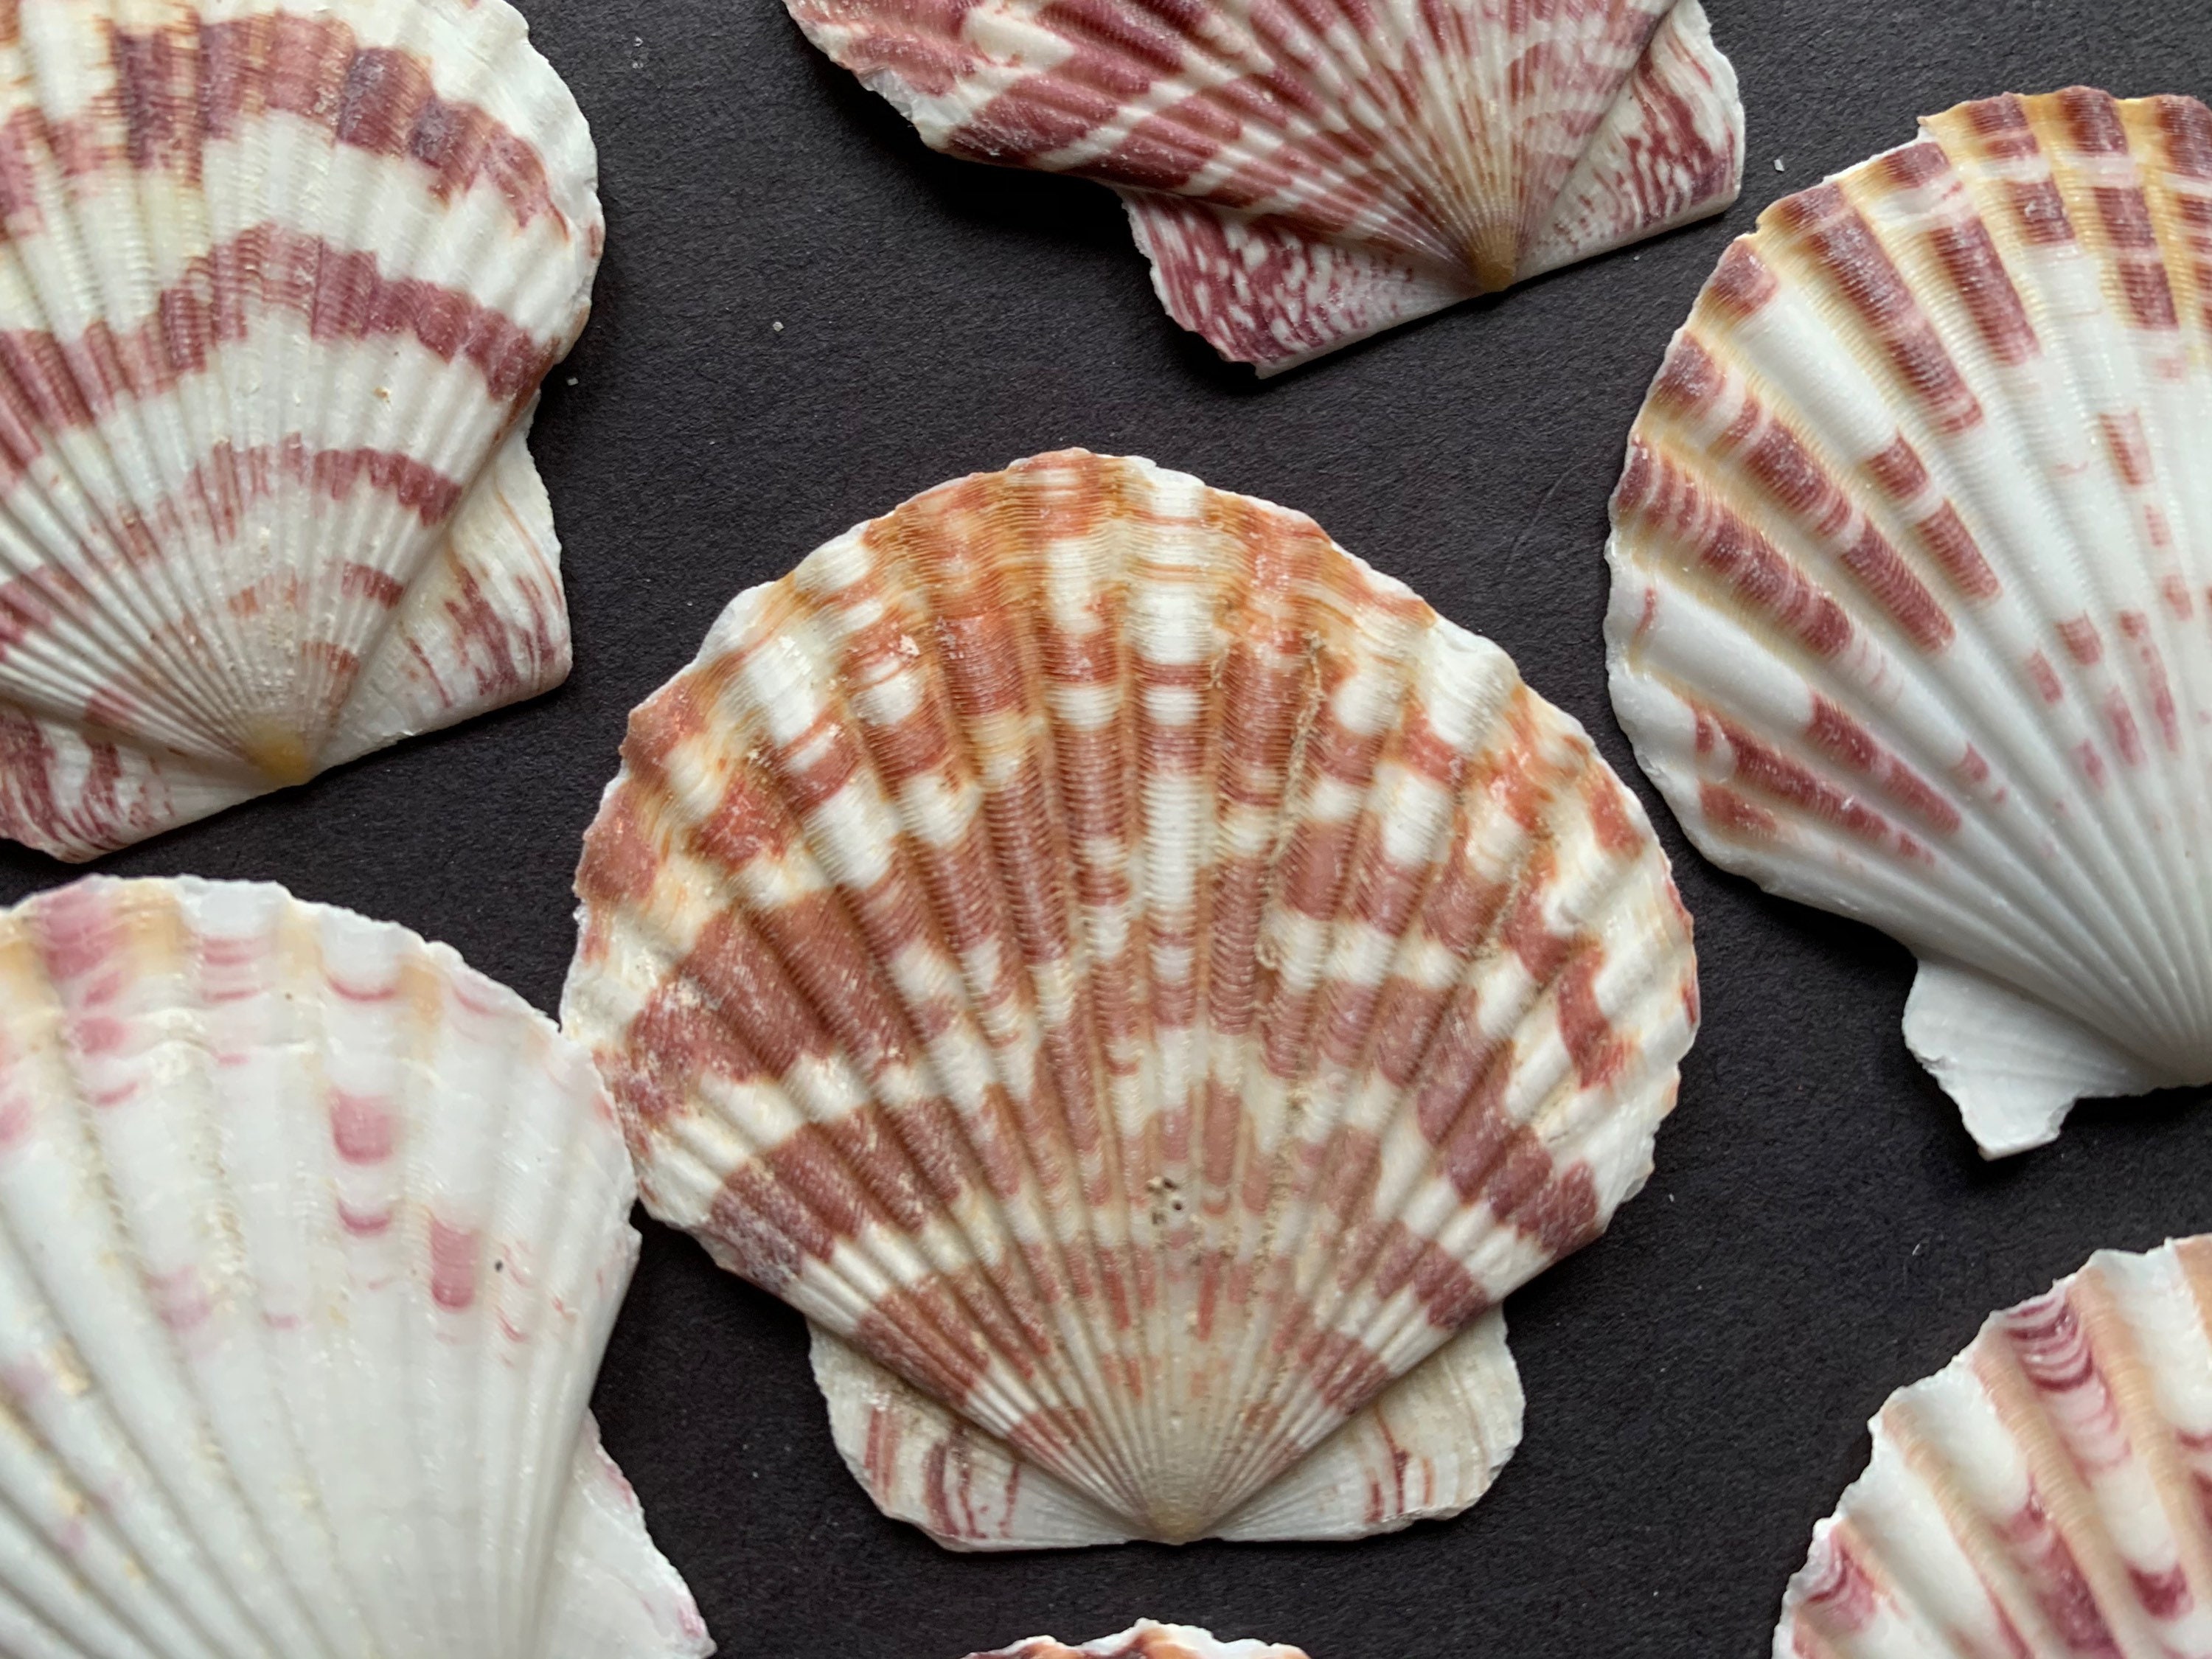 40-80mm Natural Seashells, Mixed Color Beach Seashells, Lot of Sea